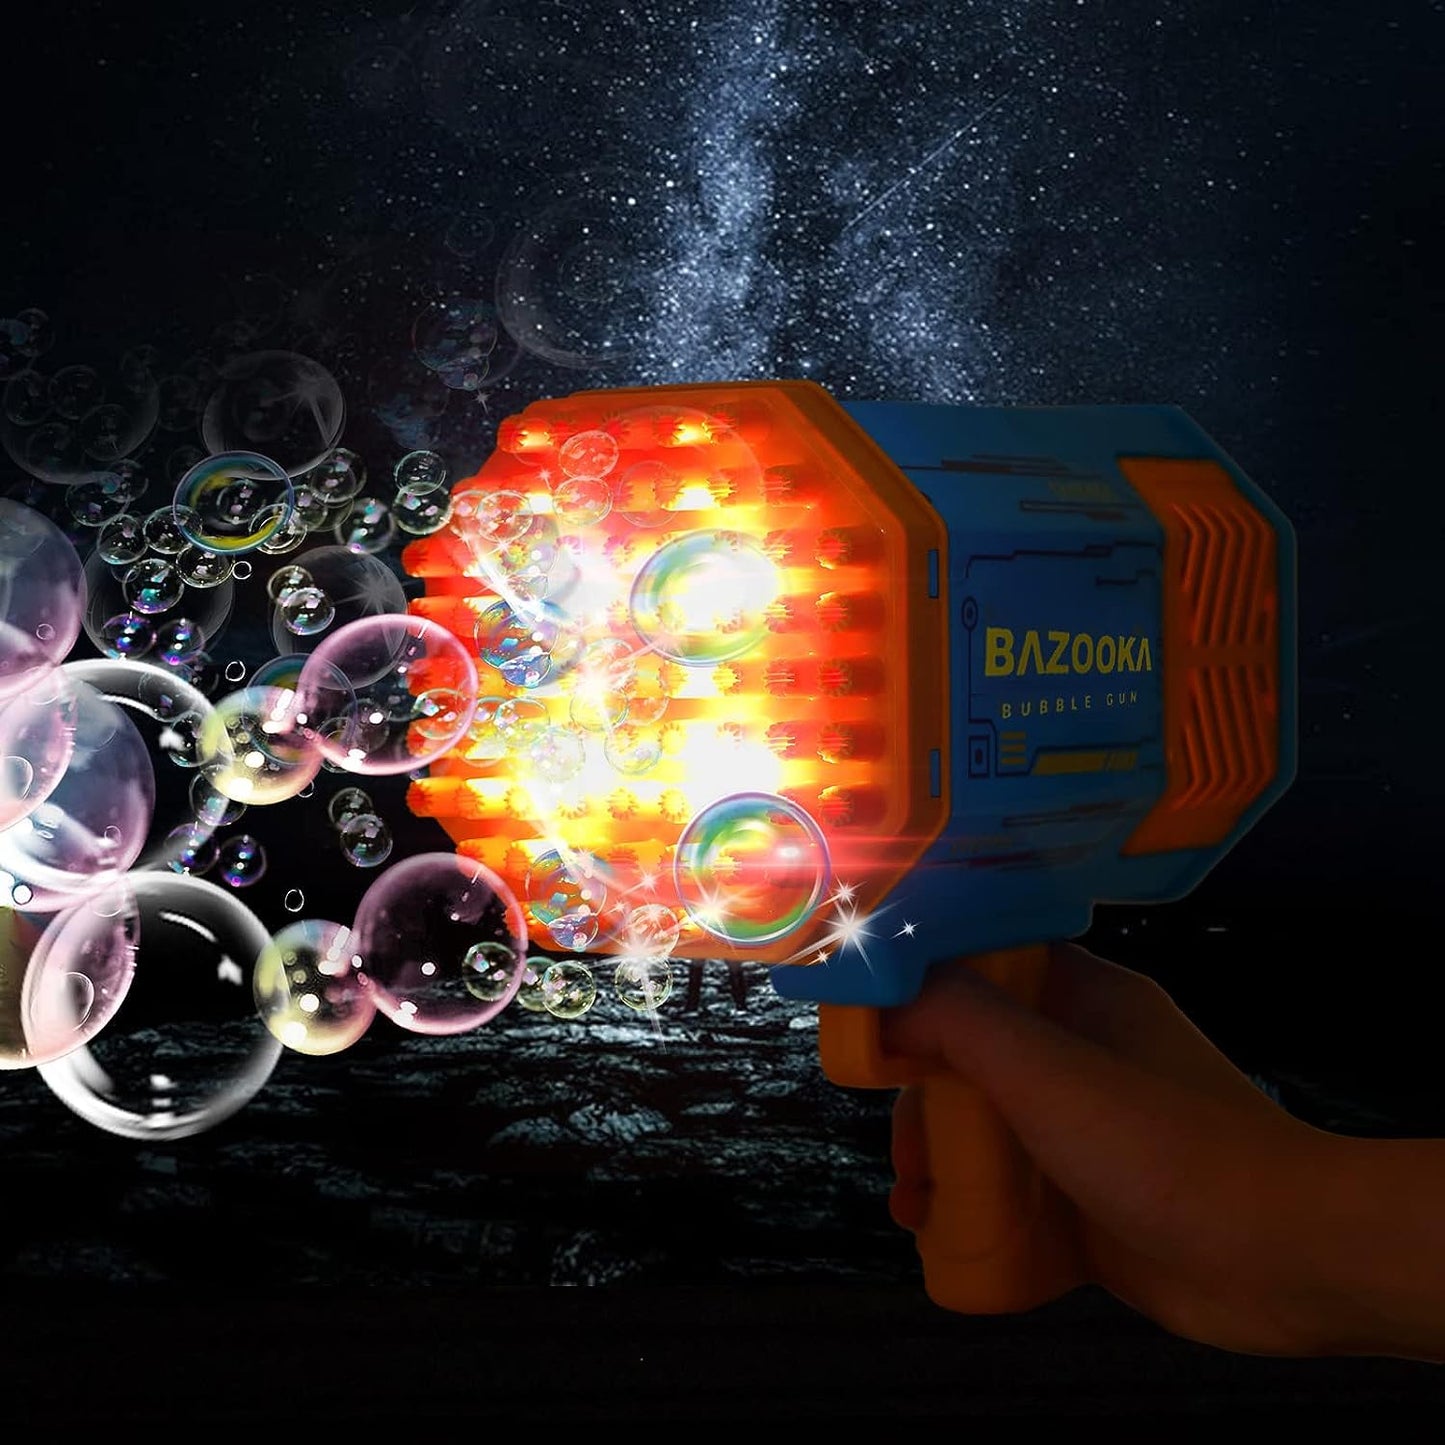 MM TOYS BubbleBlast Gun Machine Automatic - 69 Hole Bubble Blaster, Long Battery Life, Sturdy Plastic